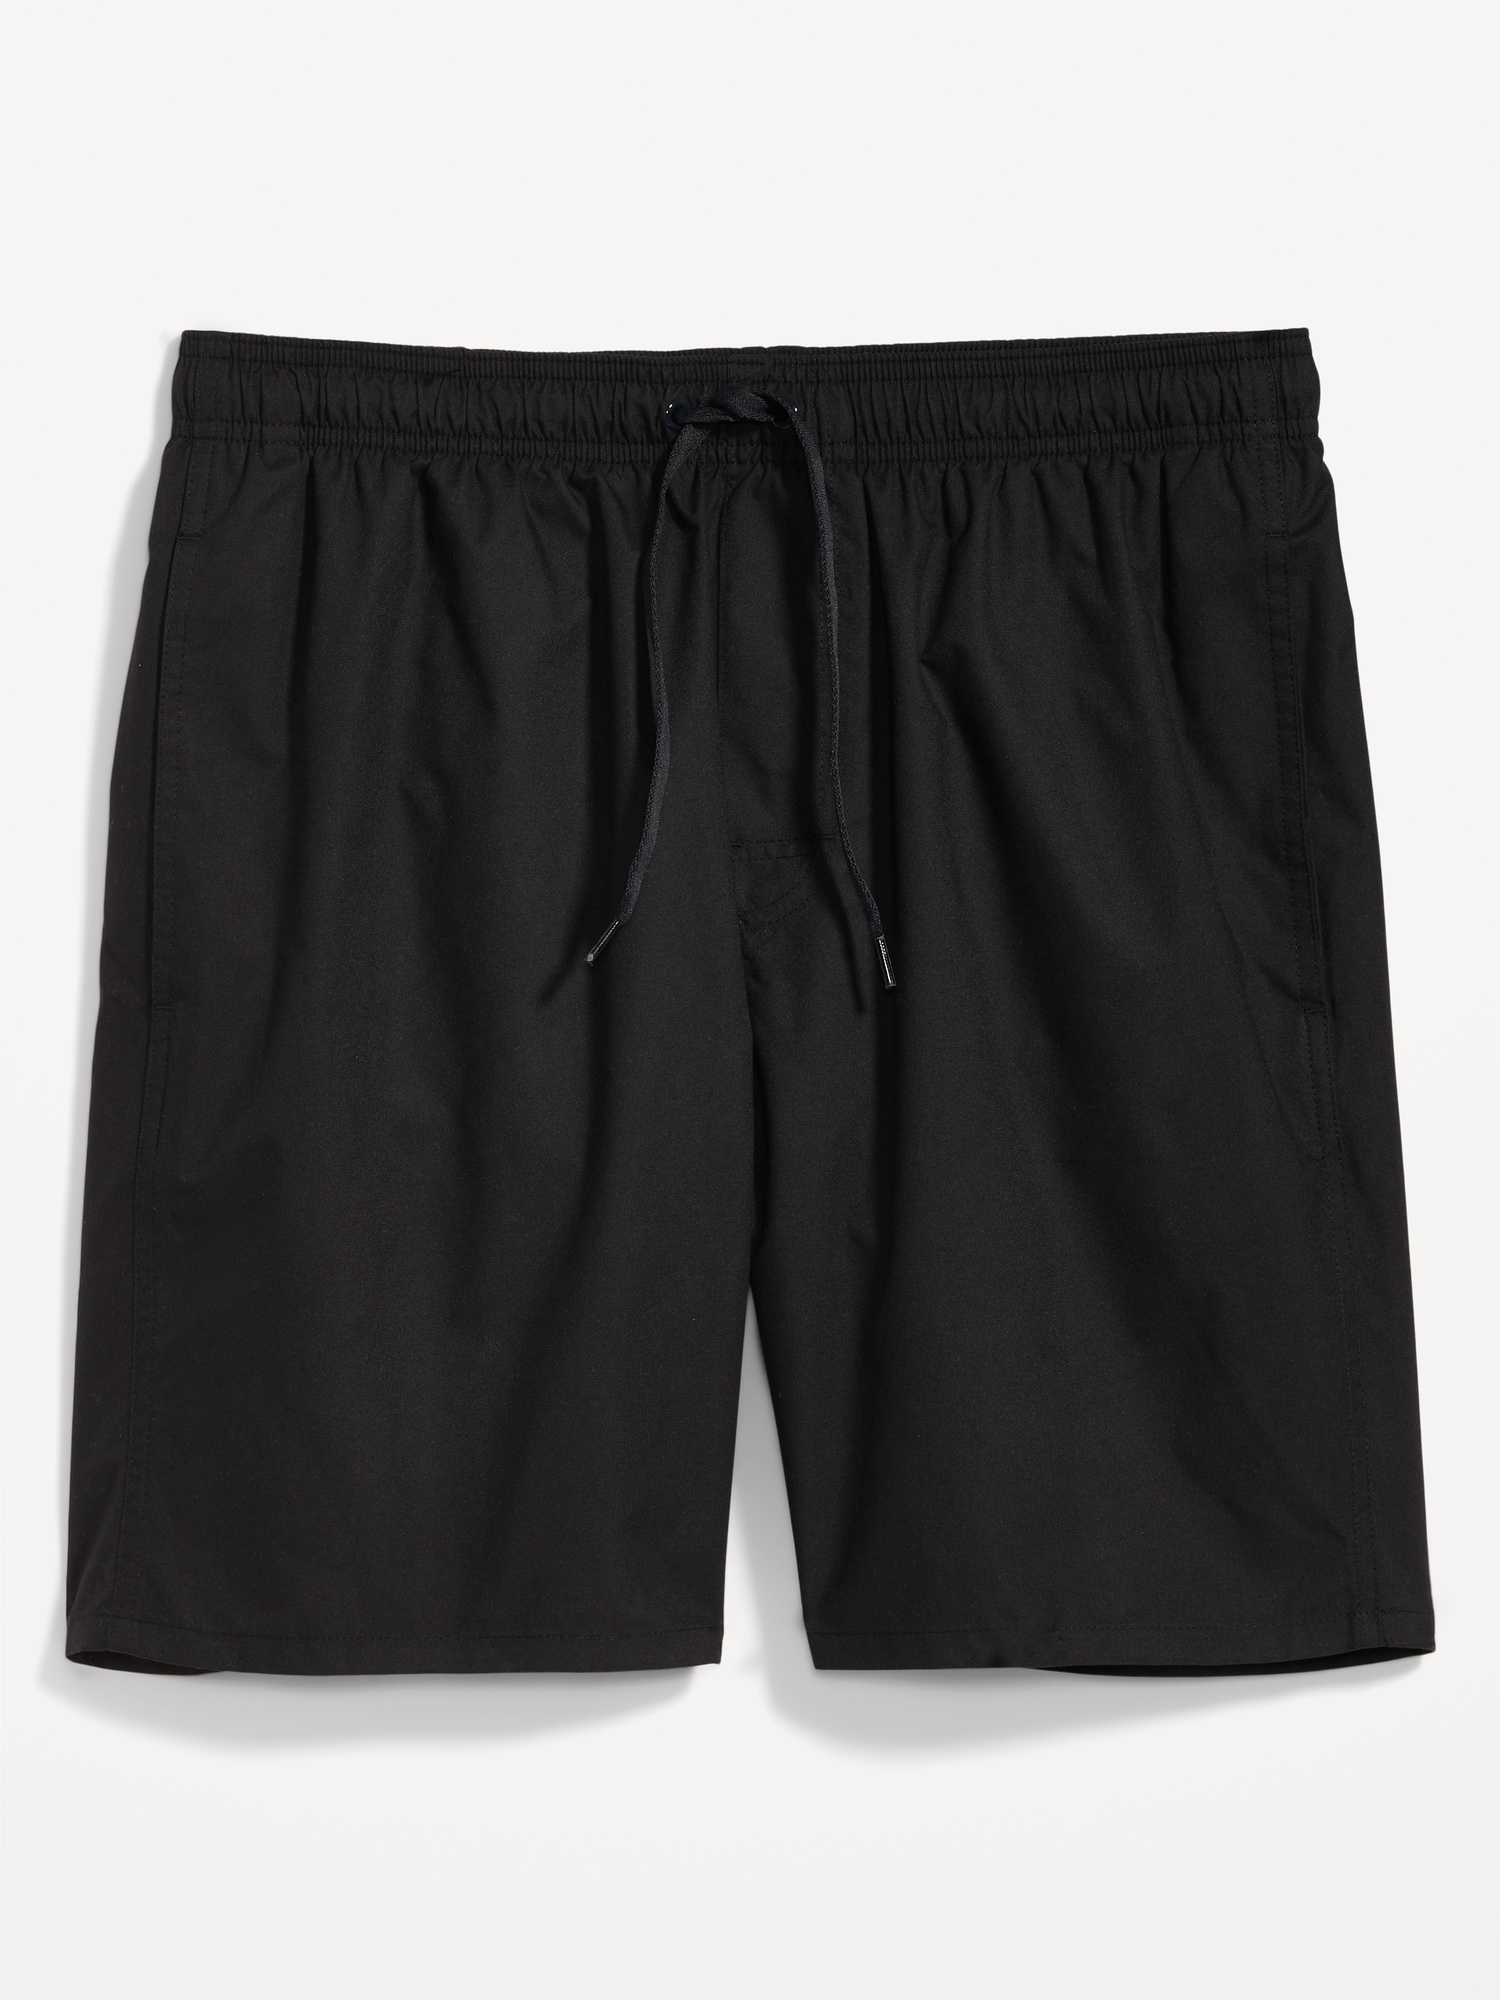 Louis Vuitton Woven Swim Trunks w/ Tags - Black, 11 Rise Swimwear